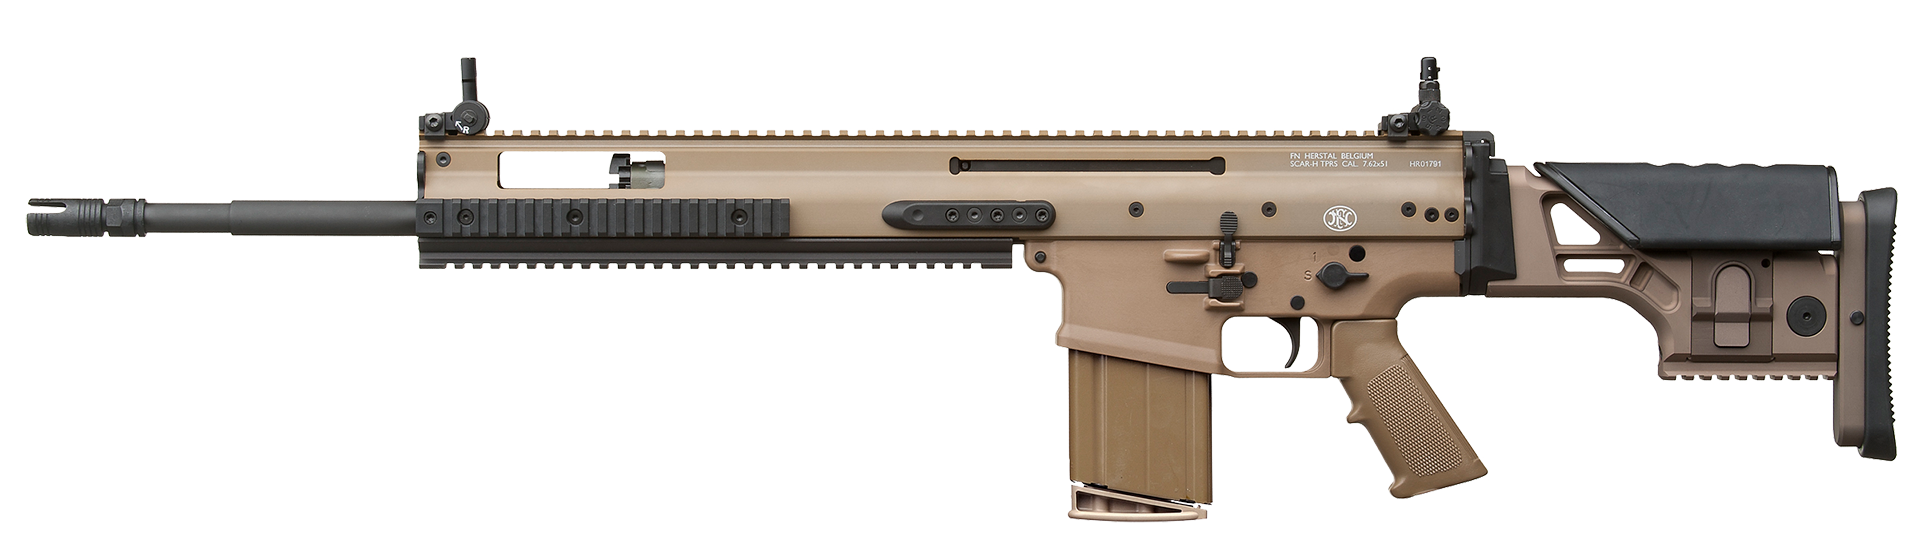 FN SCAR®-H PR